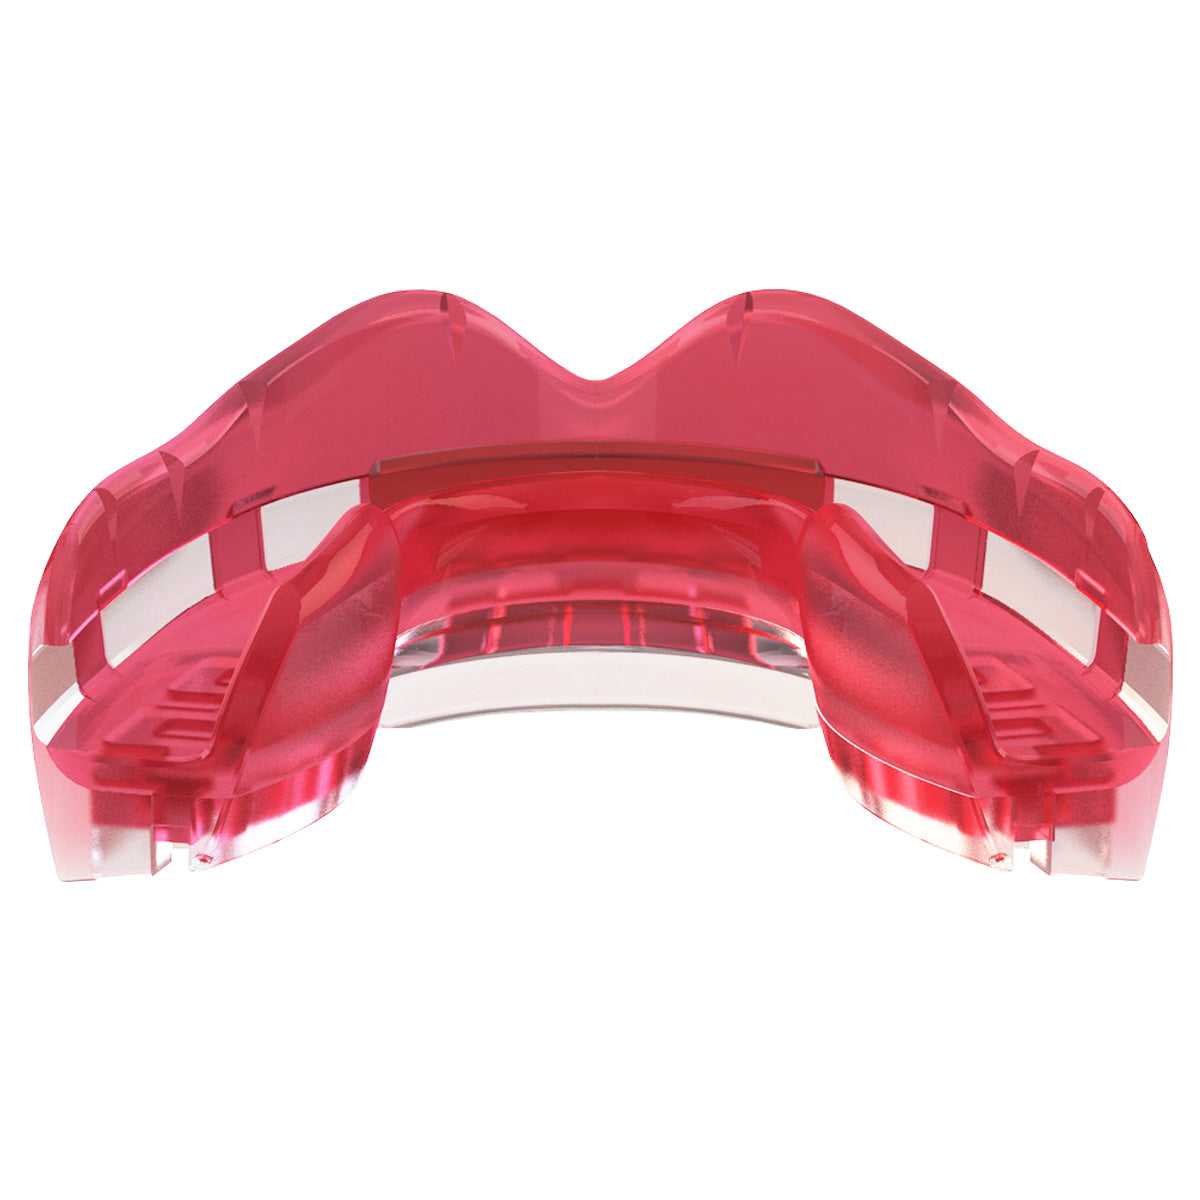 SAFEJAWZ® Ortho Series Mouthguard for Braces - Ice Pink - SAFEJAWZ gum shield